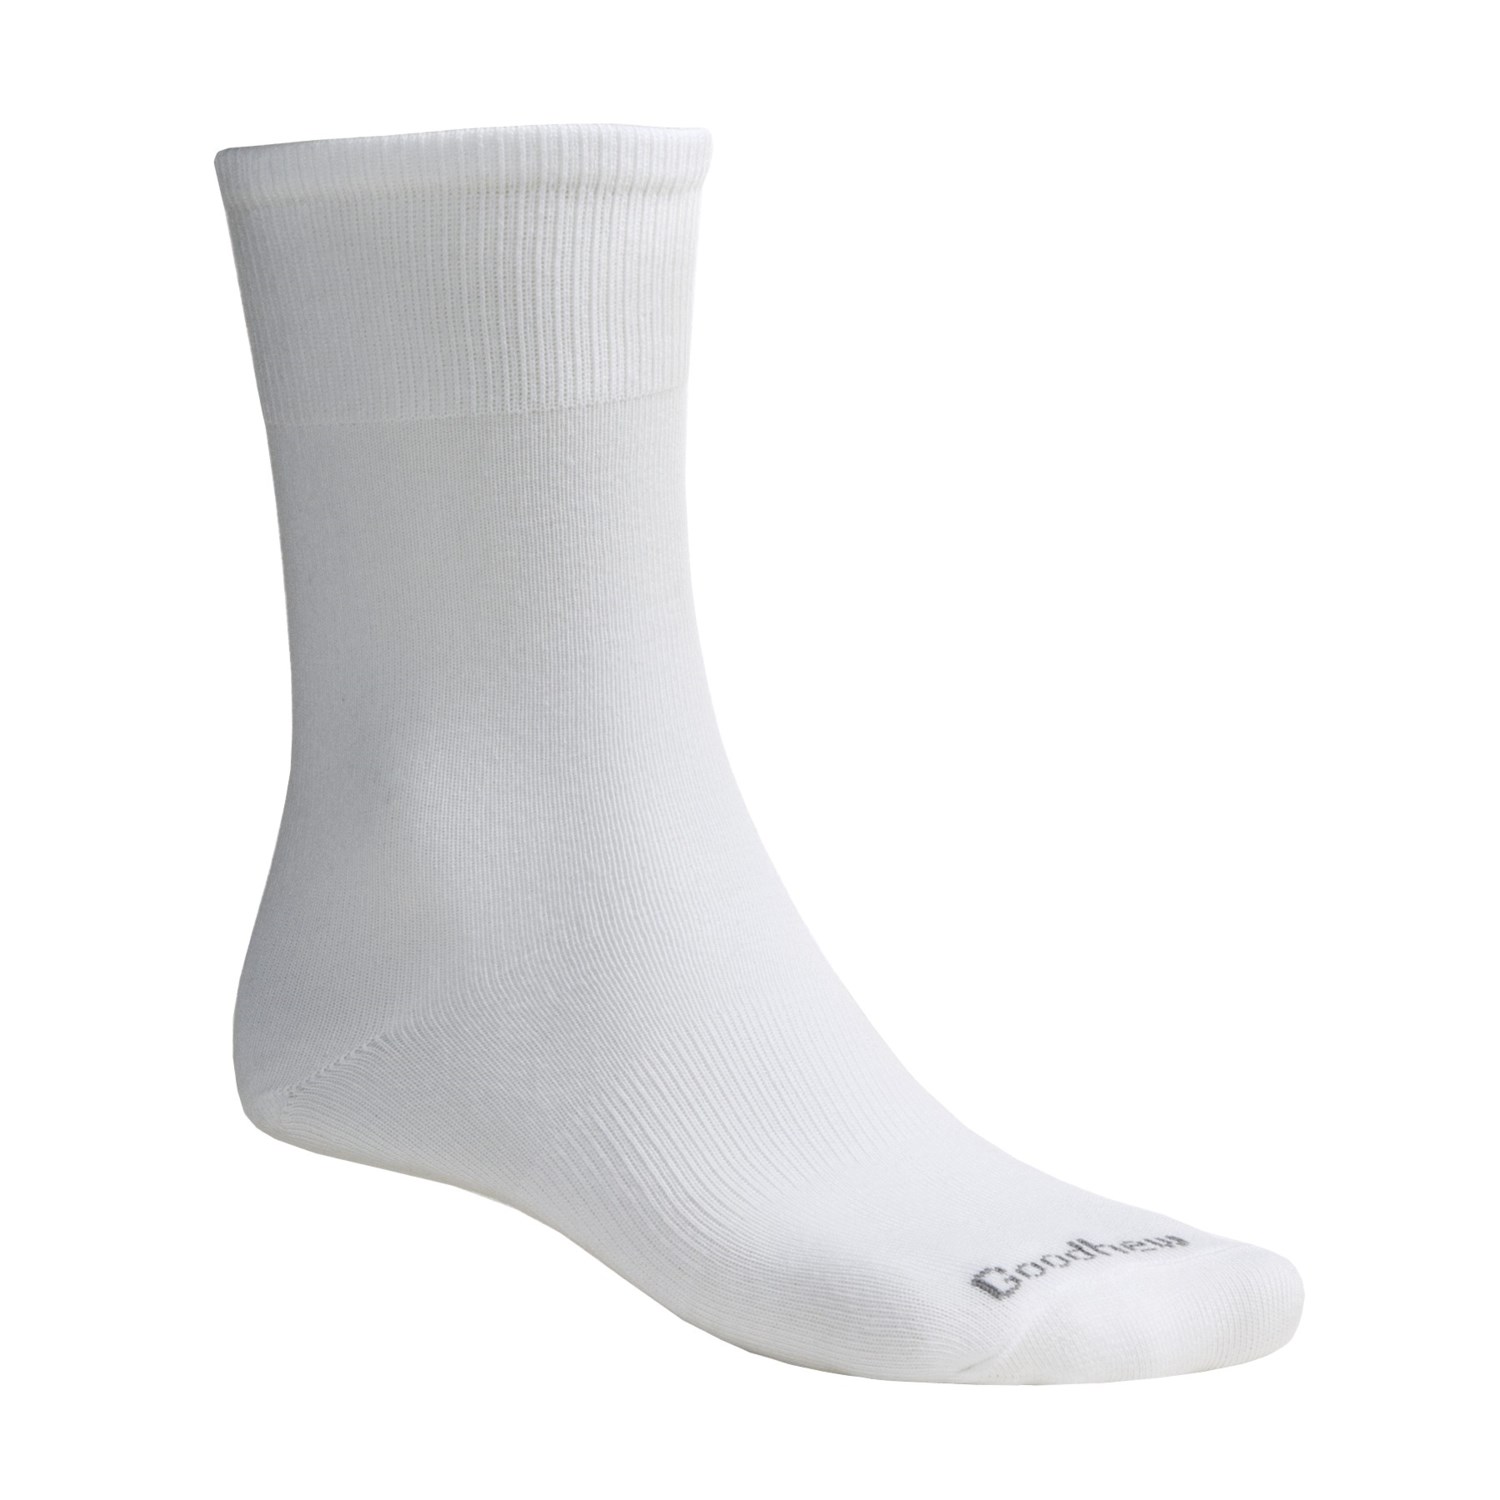 Goodhew CoolMax® Liner Socks For Men and Women  Save 37%